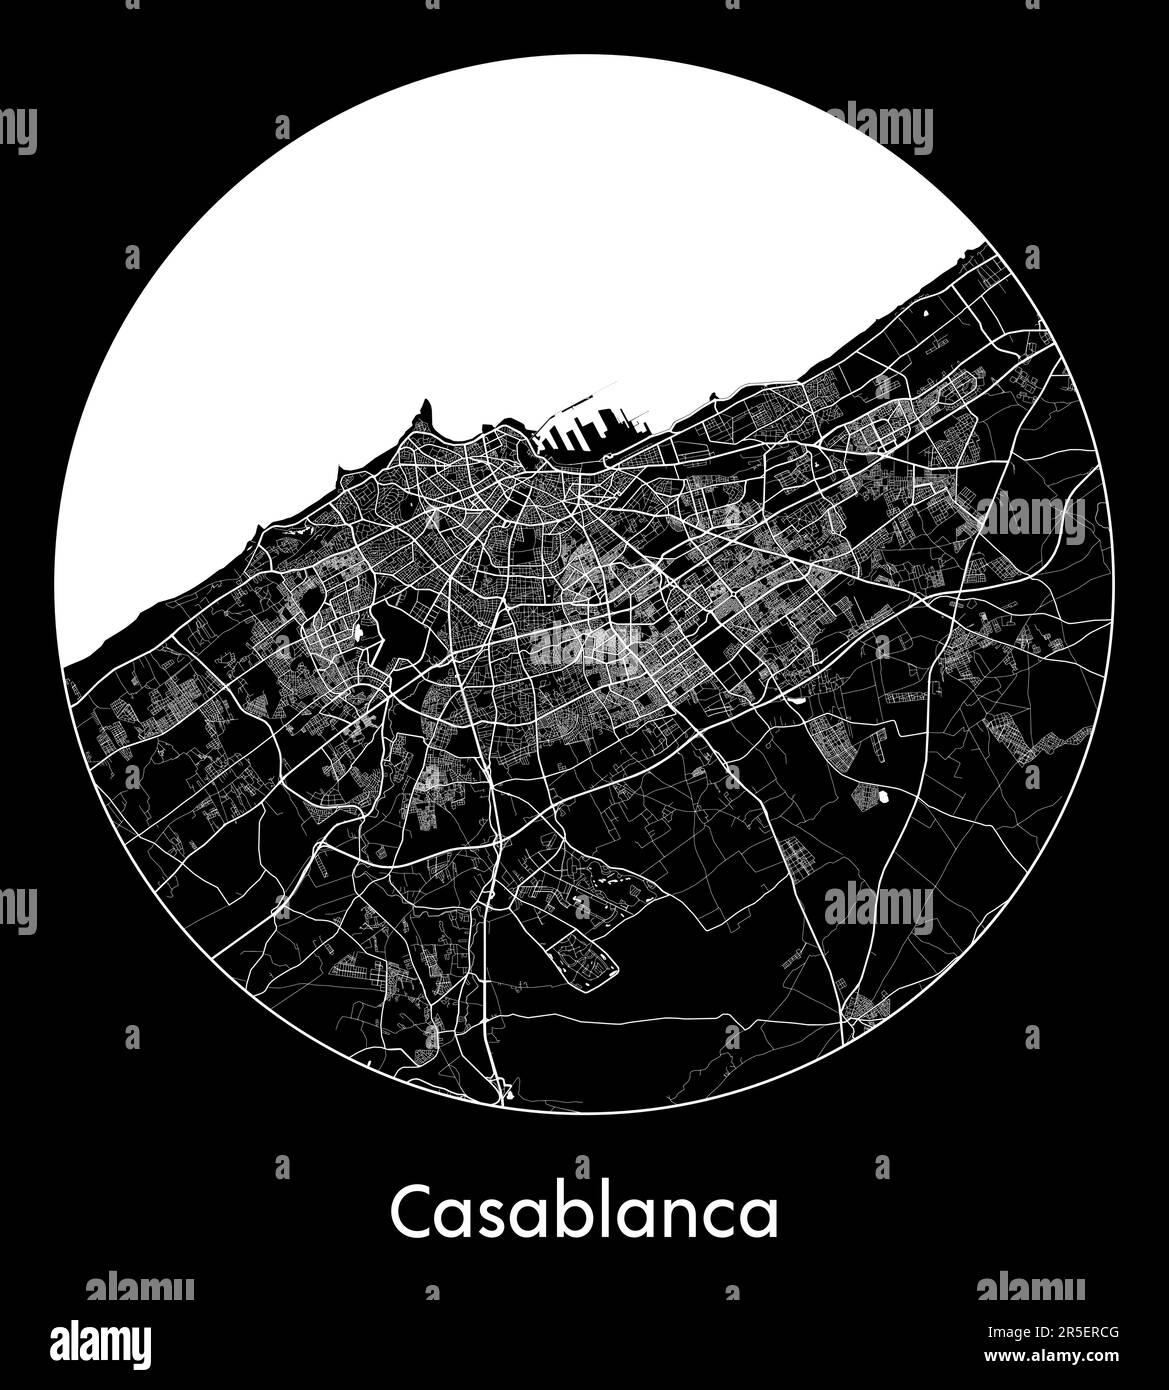 City Map Casablanca Morocco Africa vector illustration Stock Vector